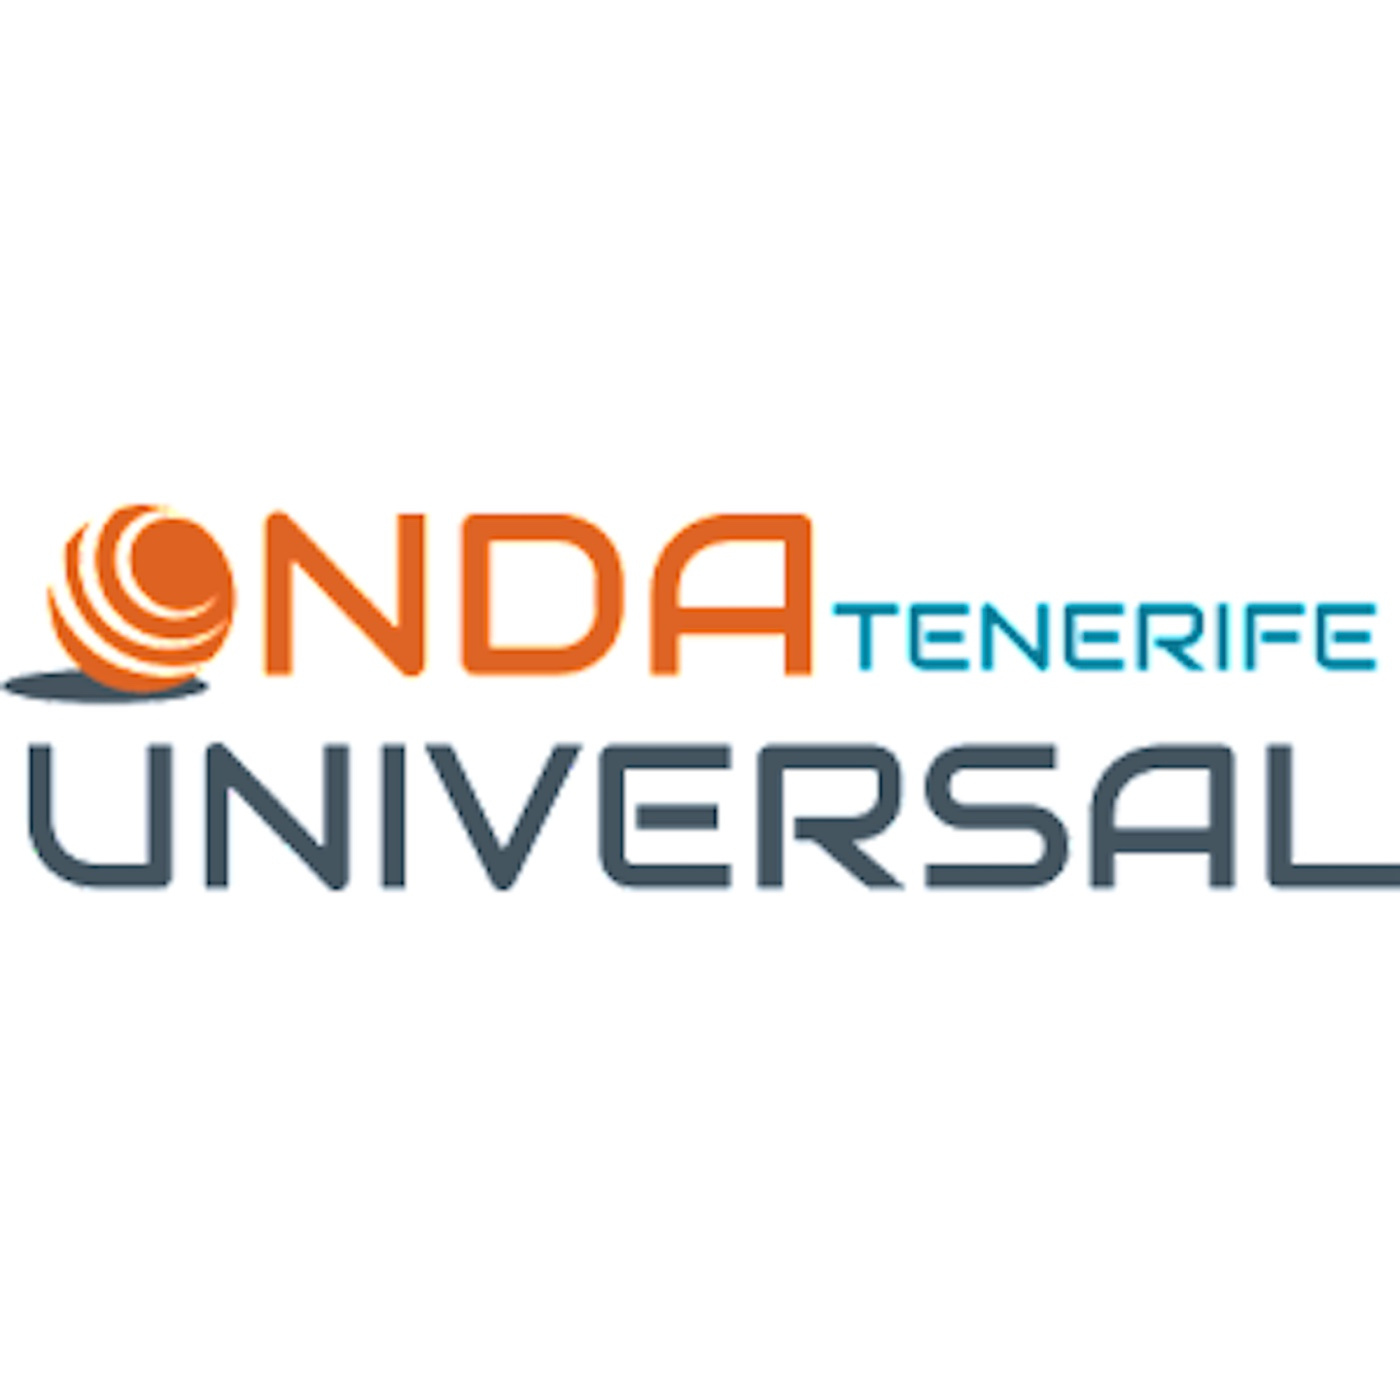 Radio Campus en Onda Universal Tenerife